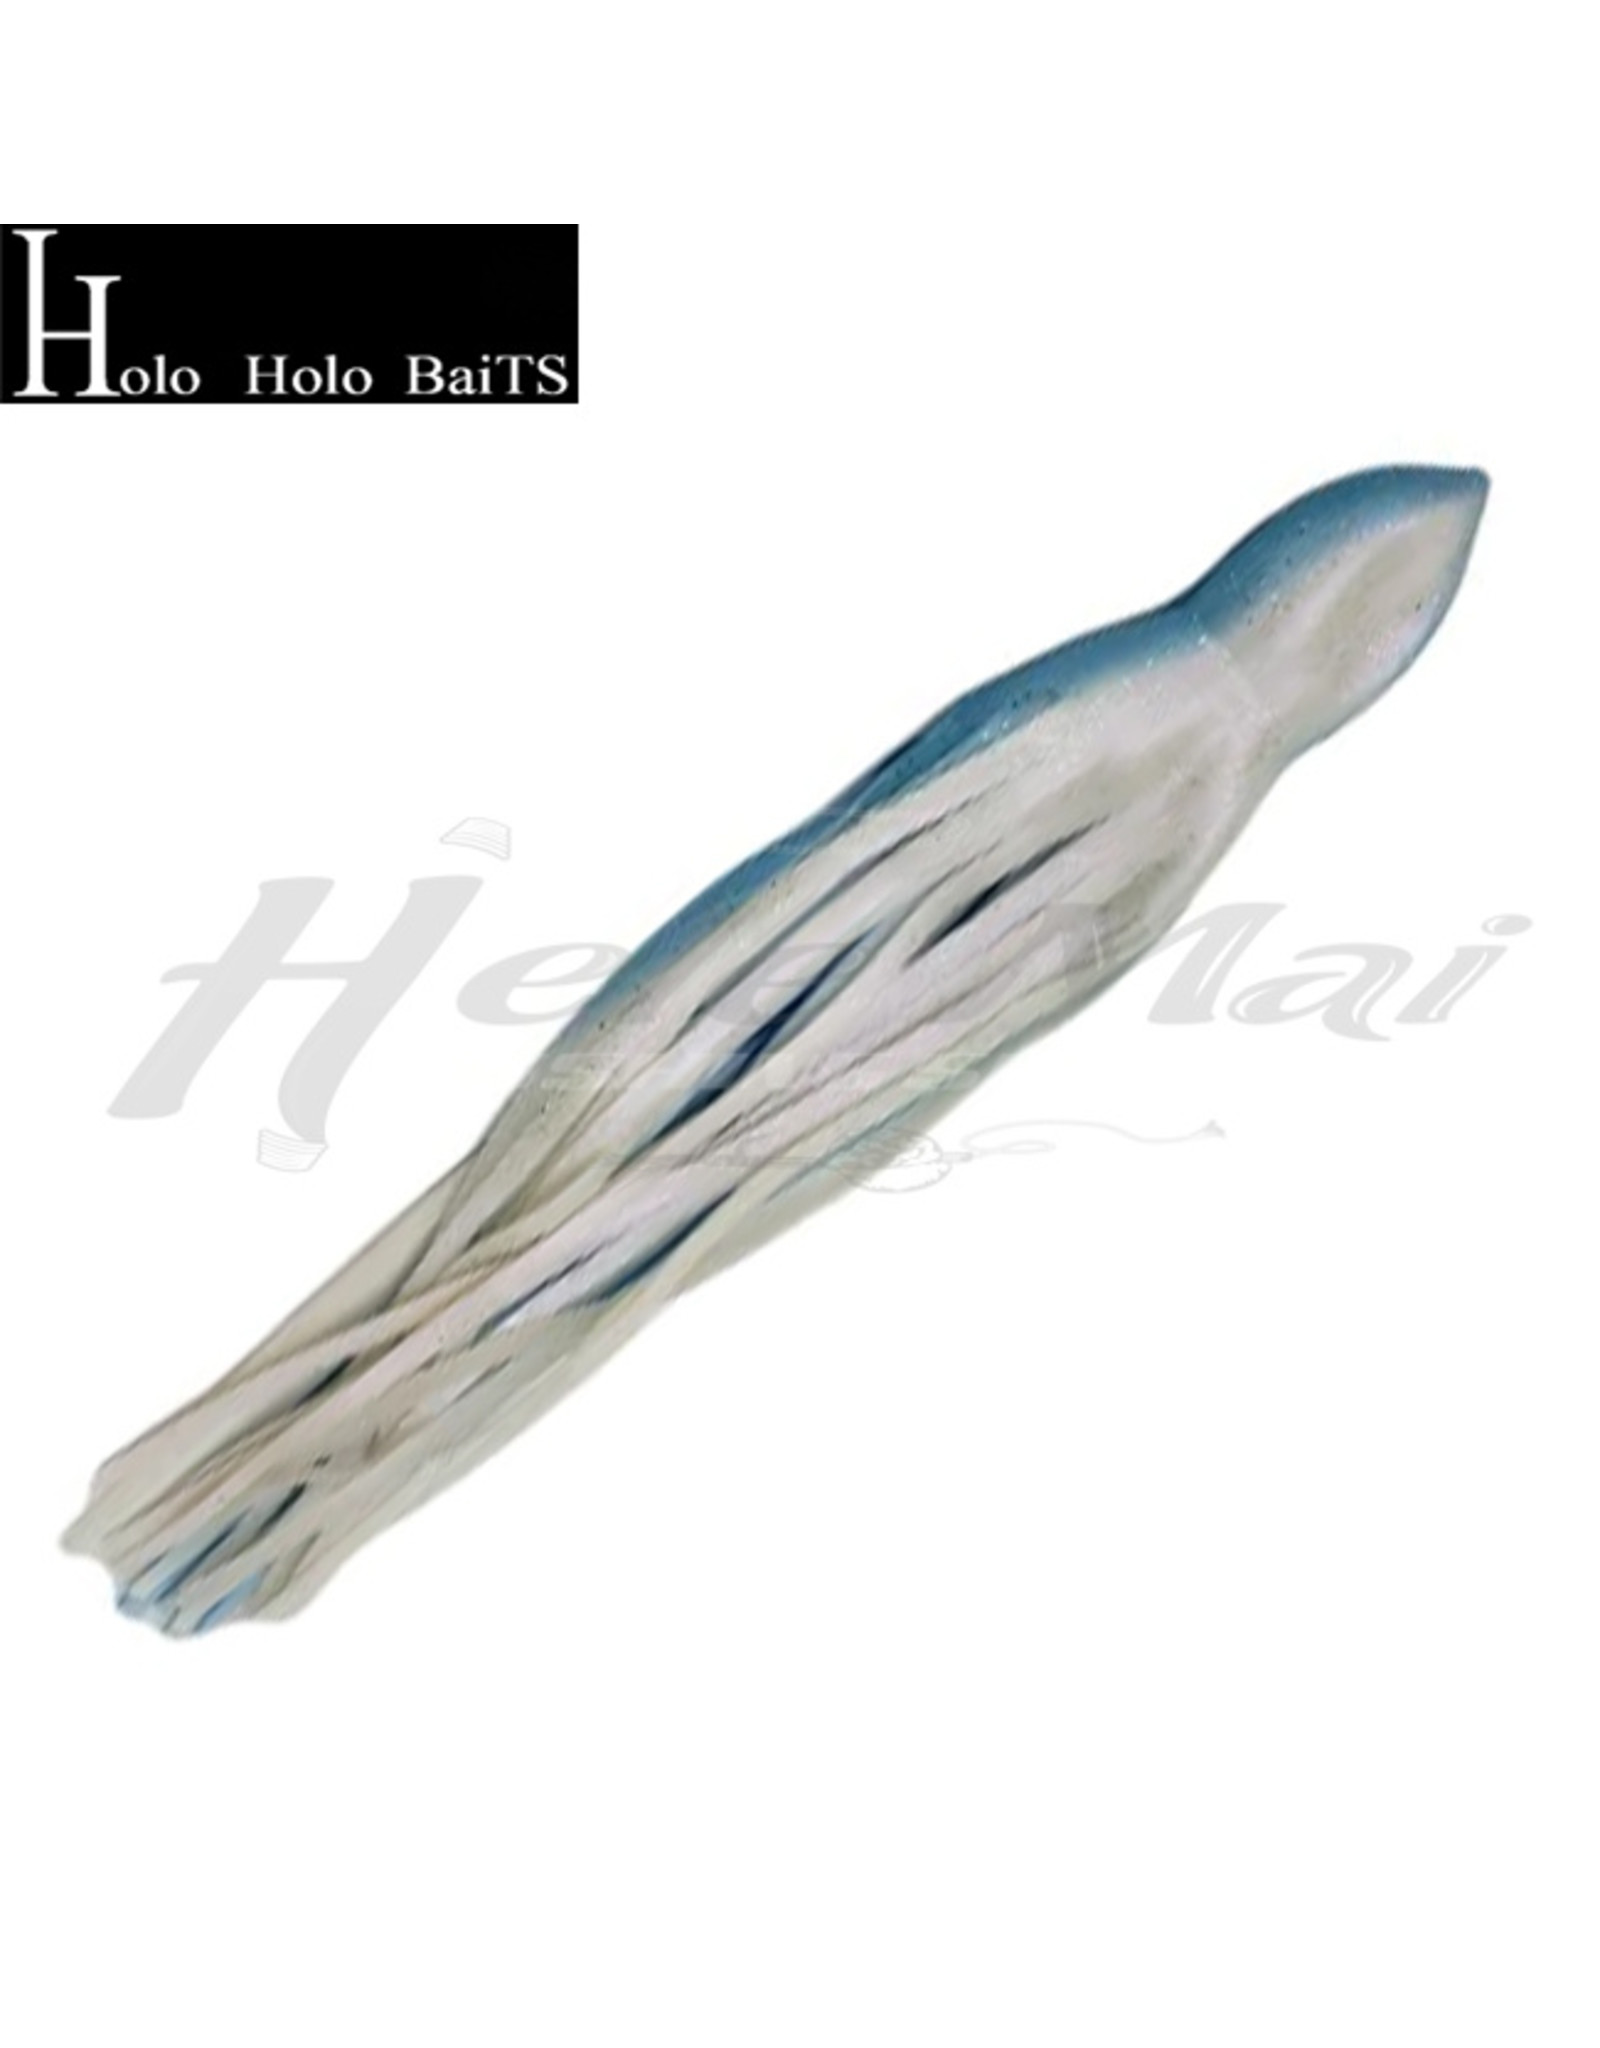 HOLO HOLO HAWAII (HHH) HH, 9" SQUID SKIRT BLUE SALMON 1